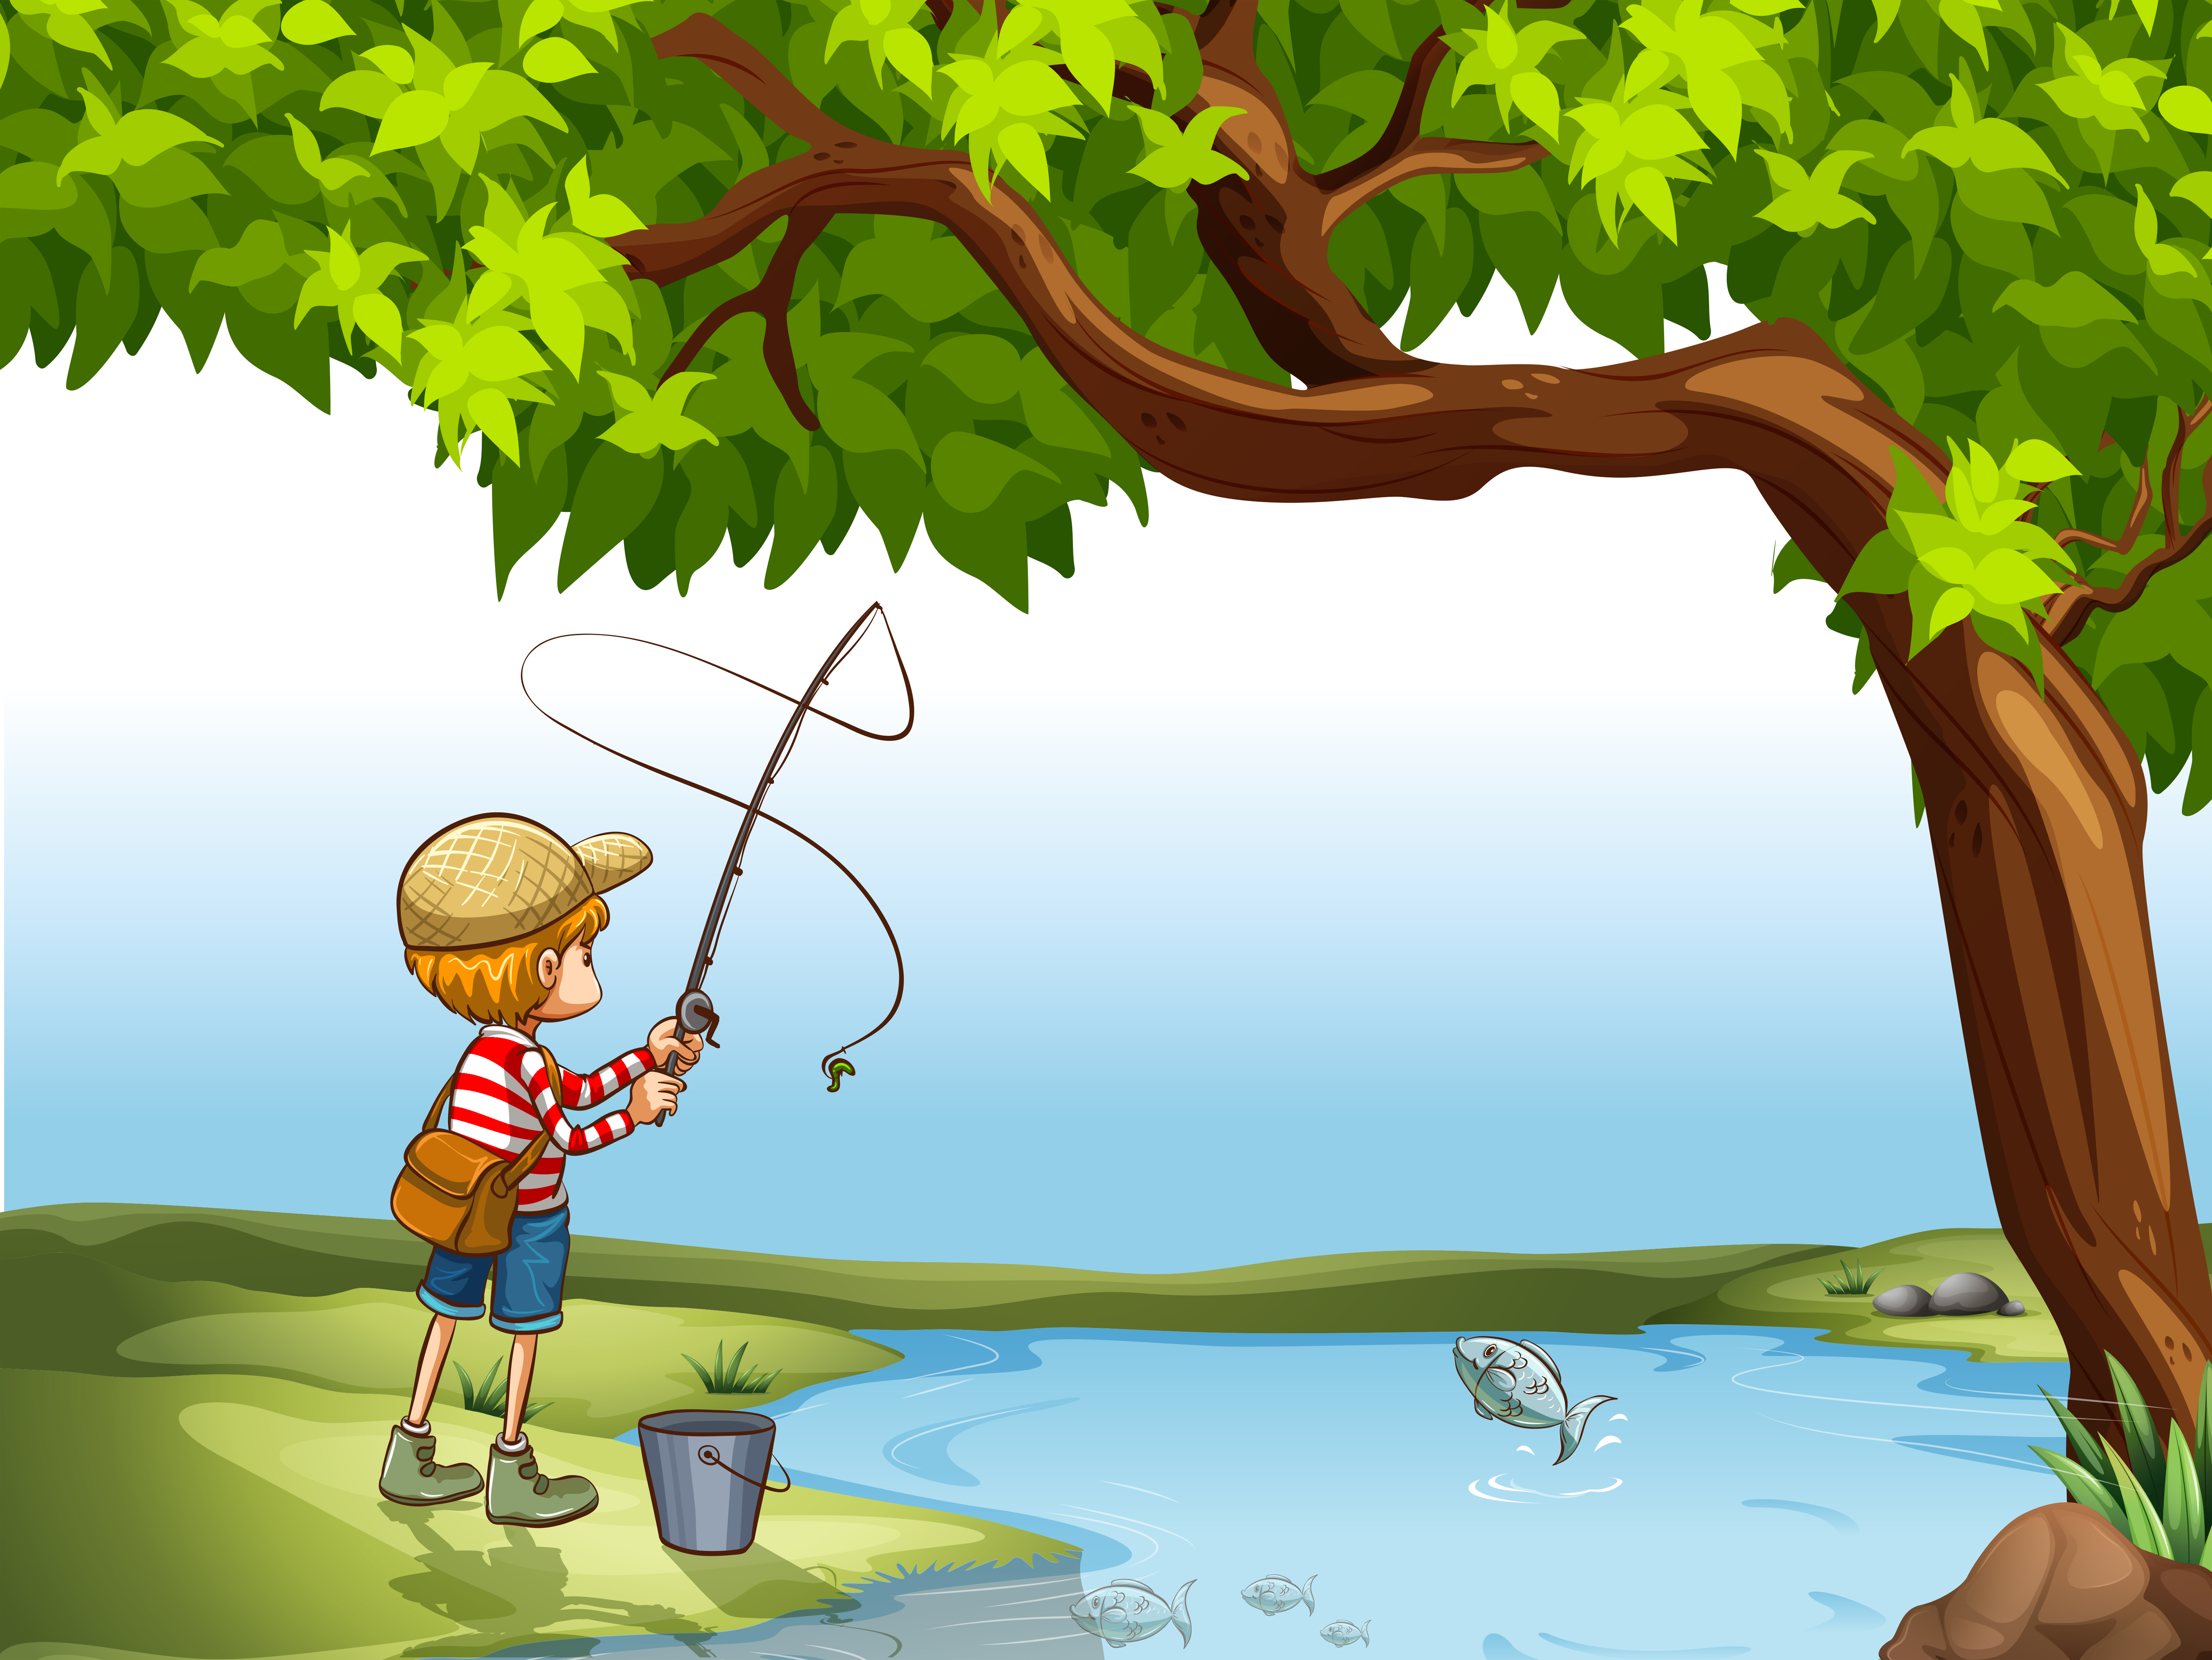 Download Boy fishing at the river - Download Free Vectors, Clipart Graphics & Vector Art